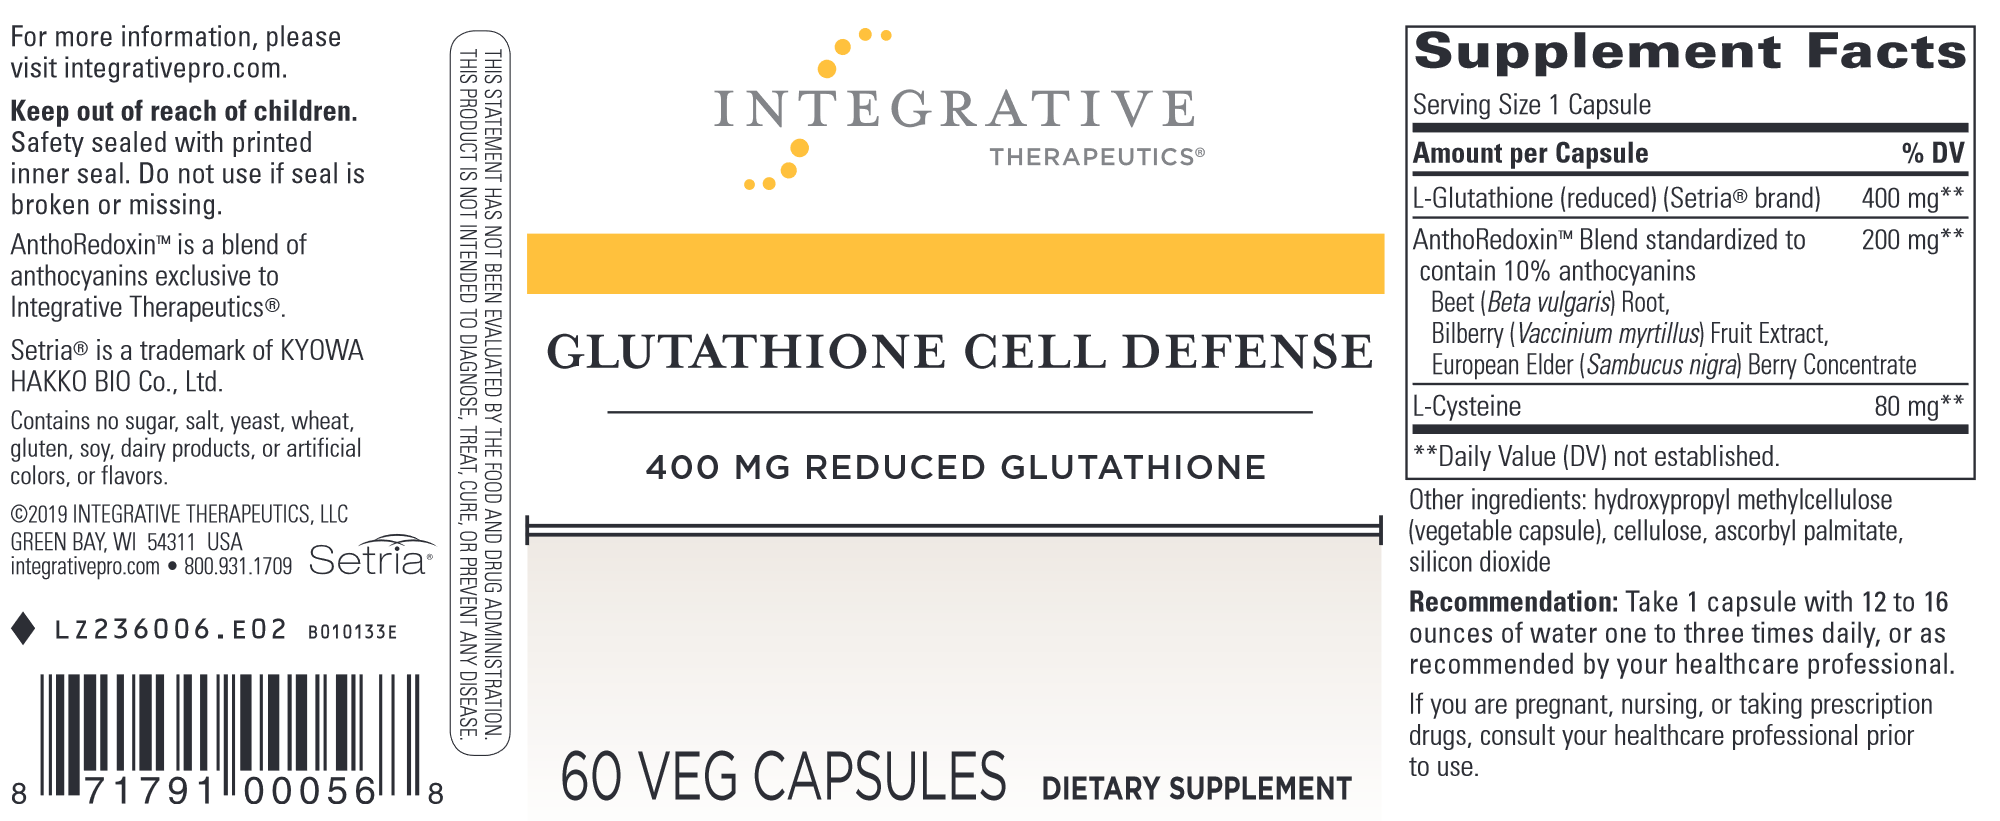 Glutathione Cell Defense